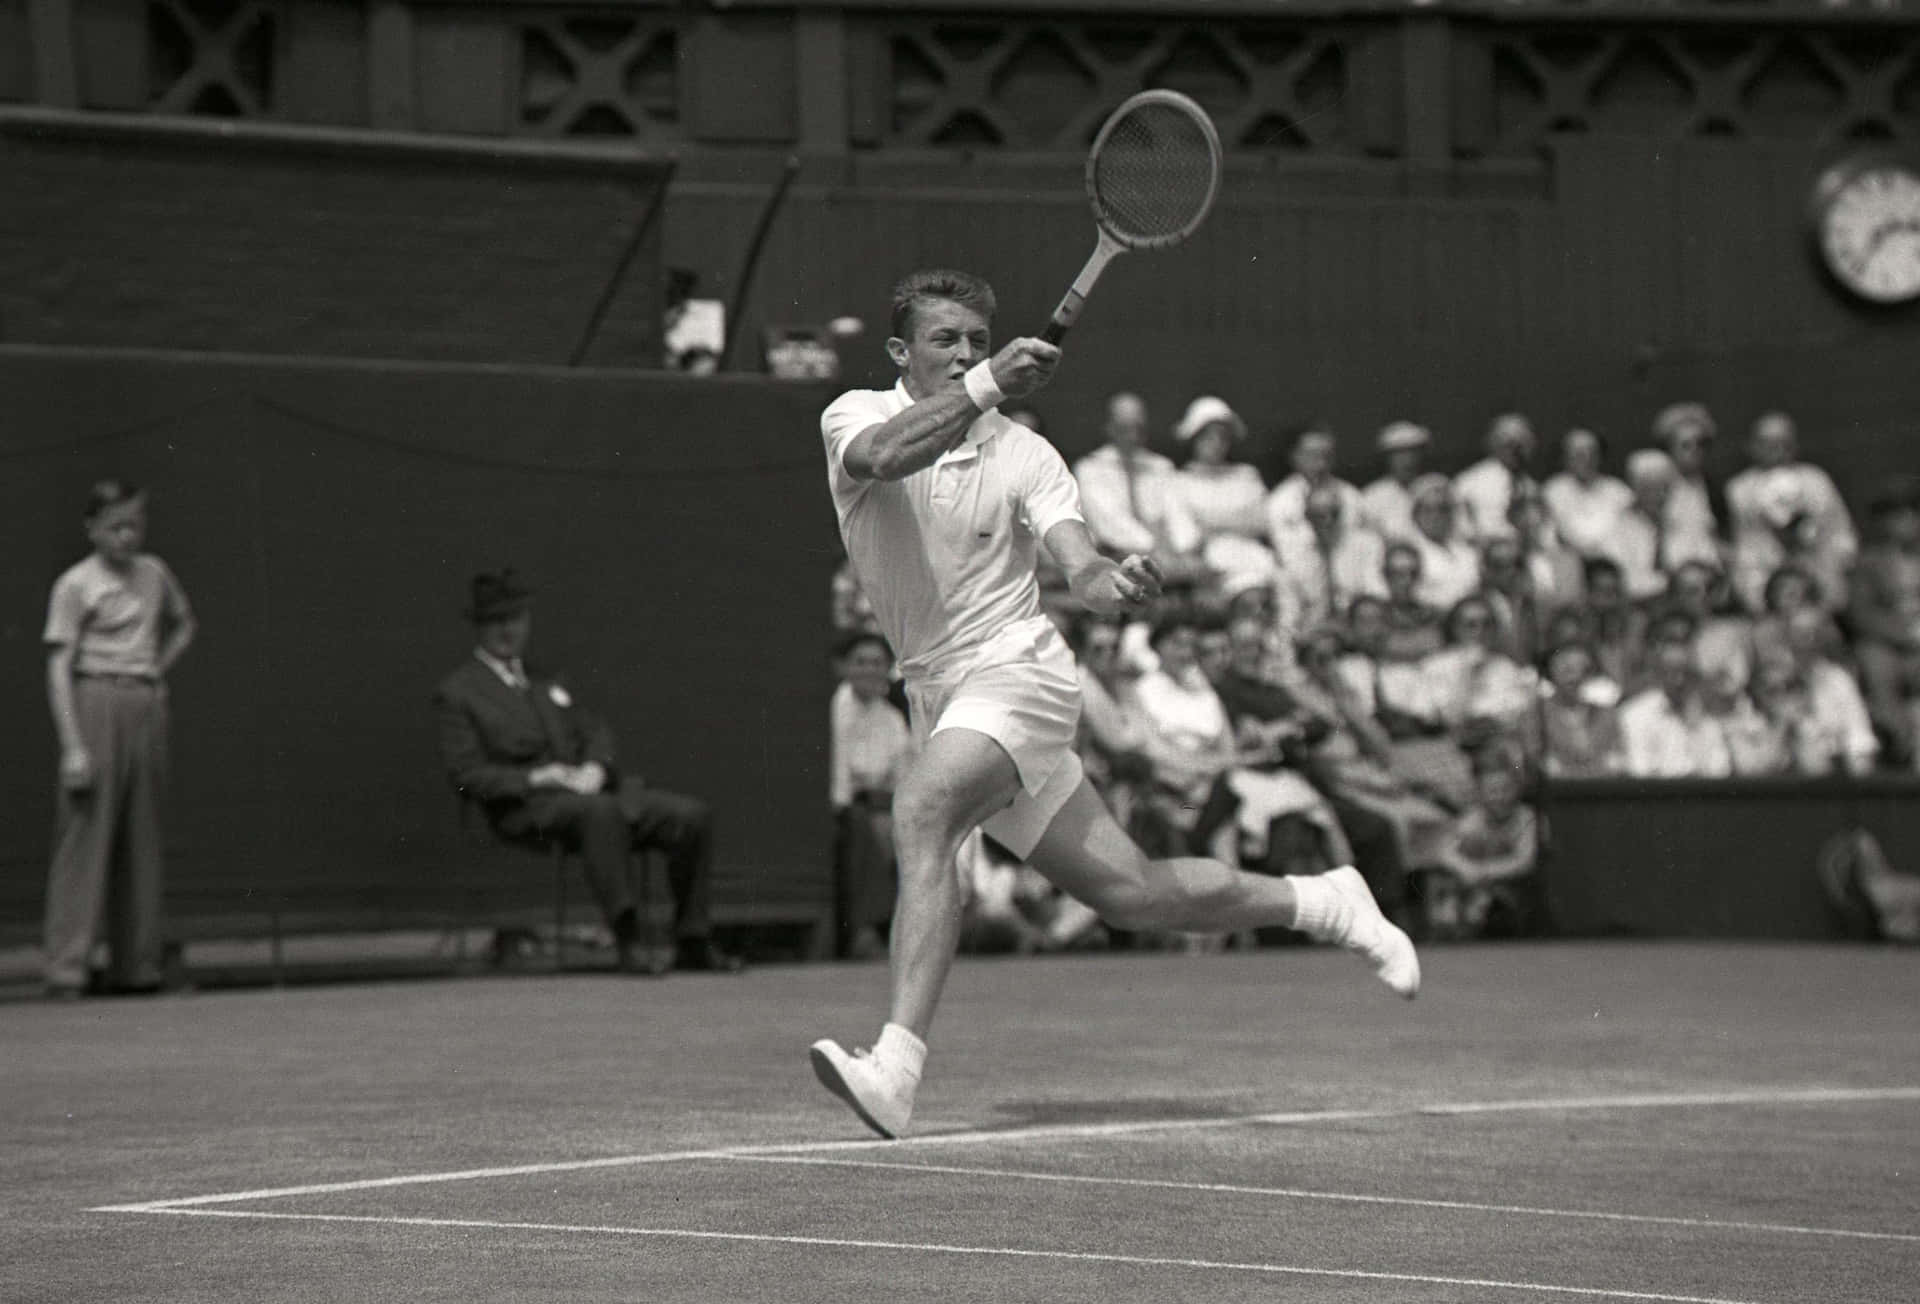 Caption: Tony Trabert - Dominating the Tennis Court Wallpaper